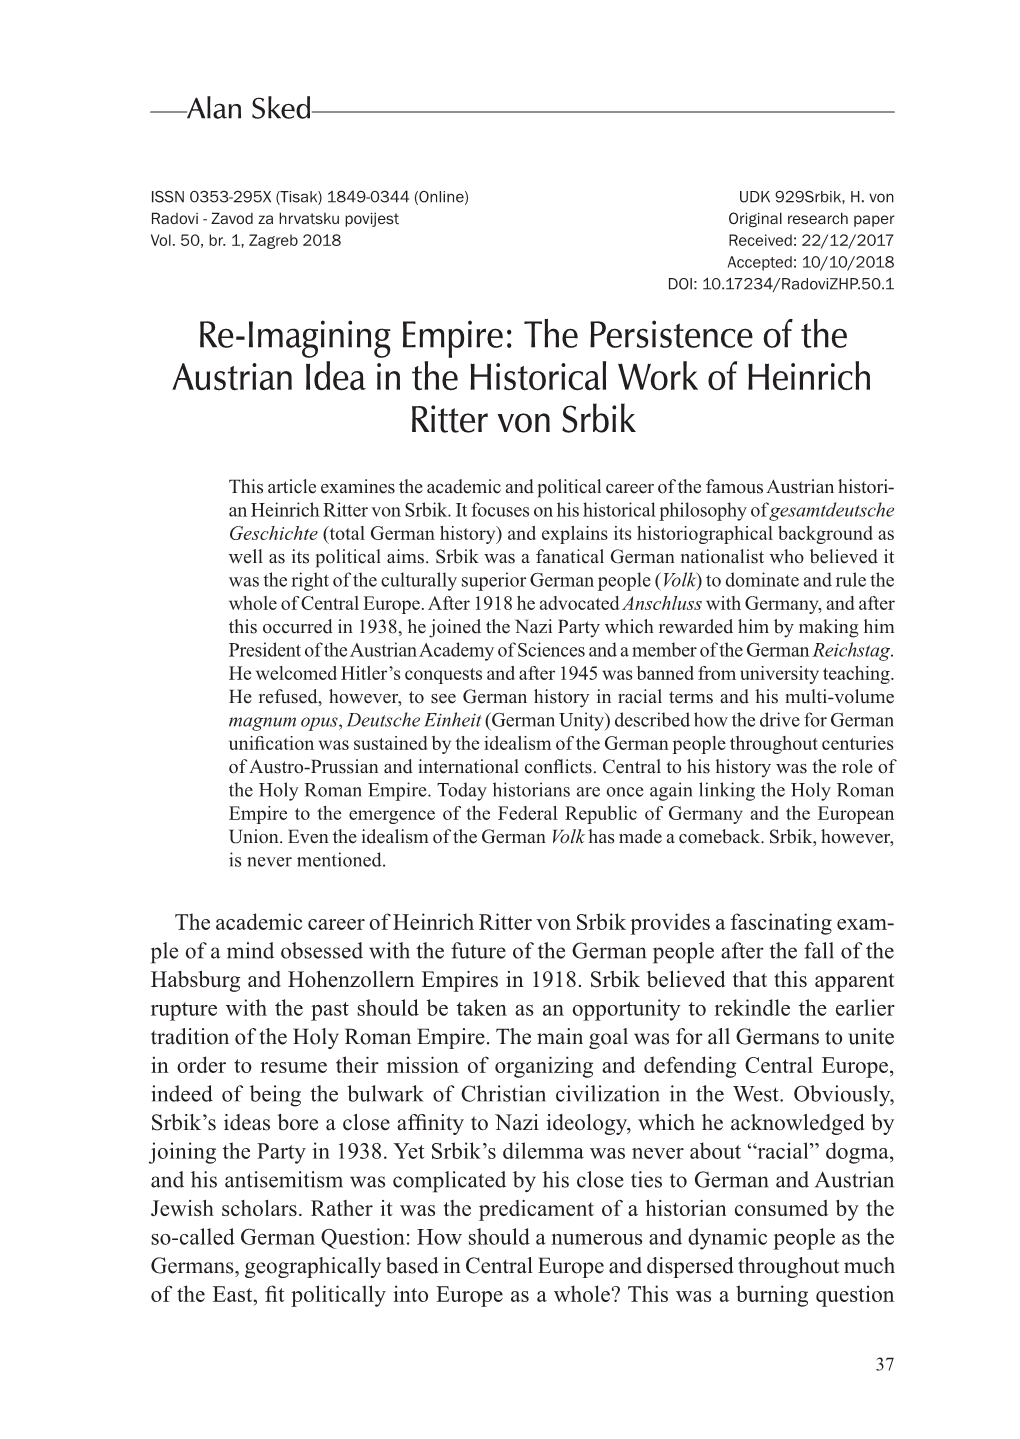 The Persistence of the Austrian Idea in the Historical Work of Heinrich Ritter Von Srbik